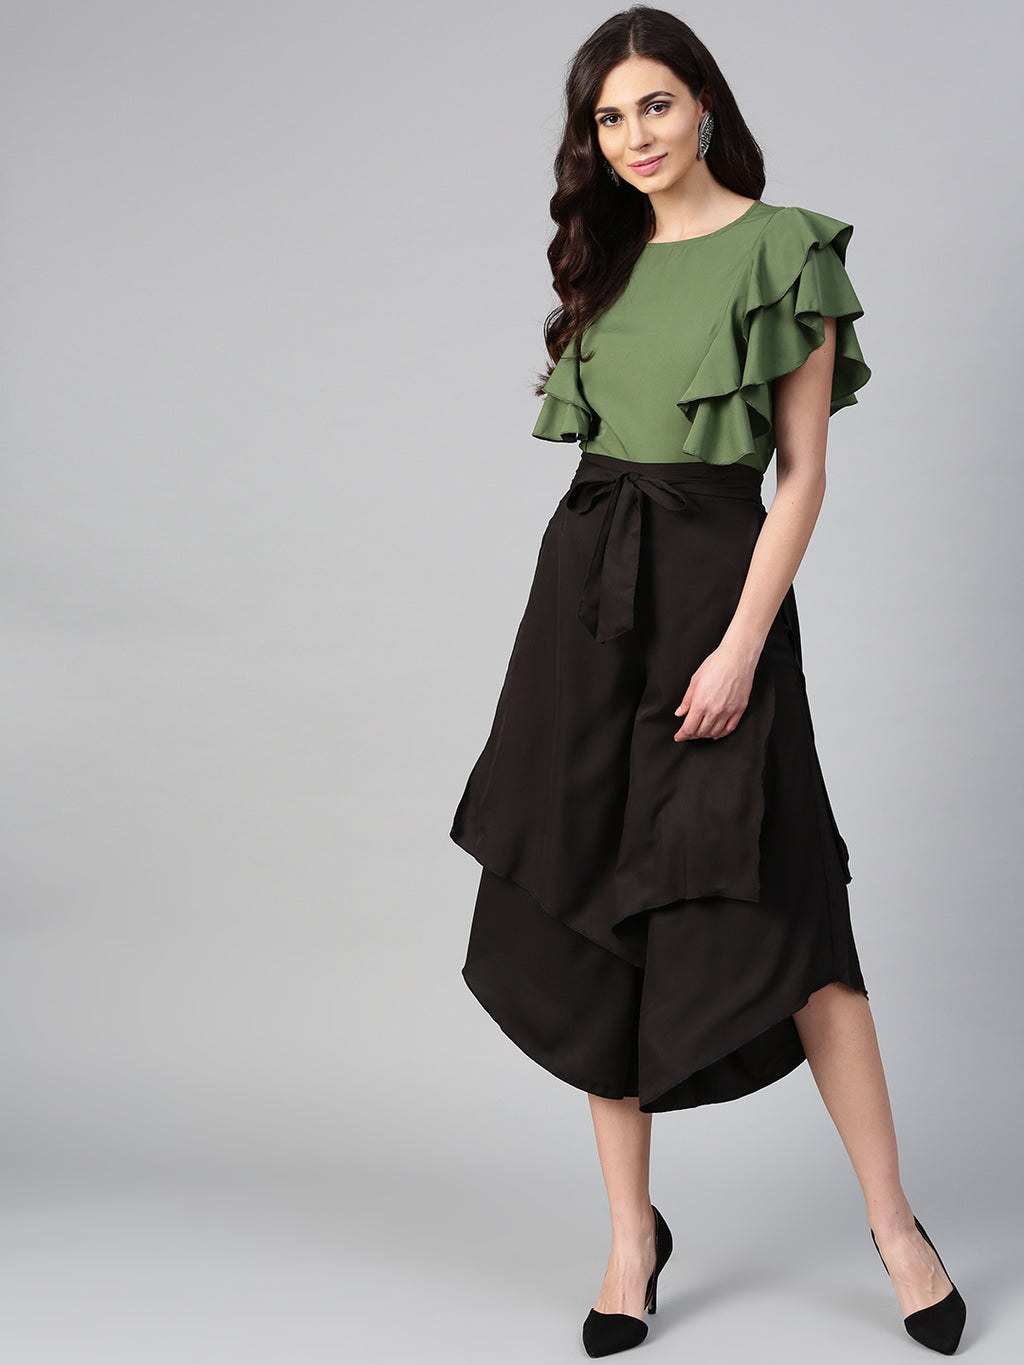 Olive Princess Ruffle Sleeveless Top & Black Layered Trouser Set (Sku-BLMG7822).